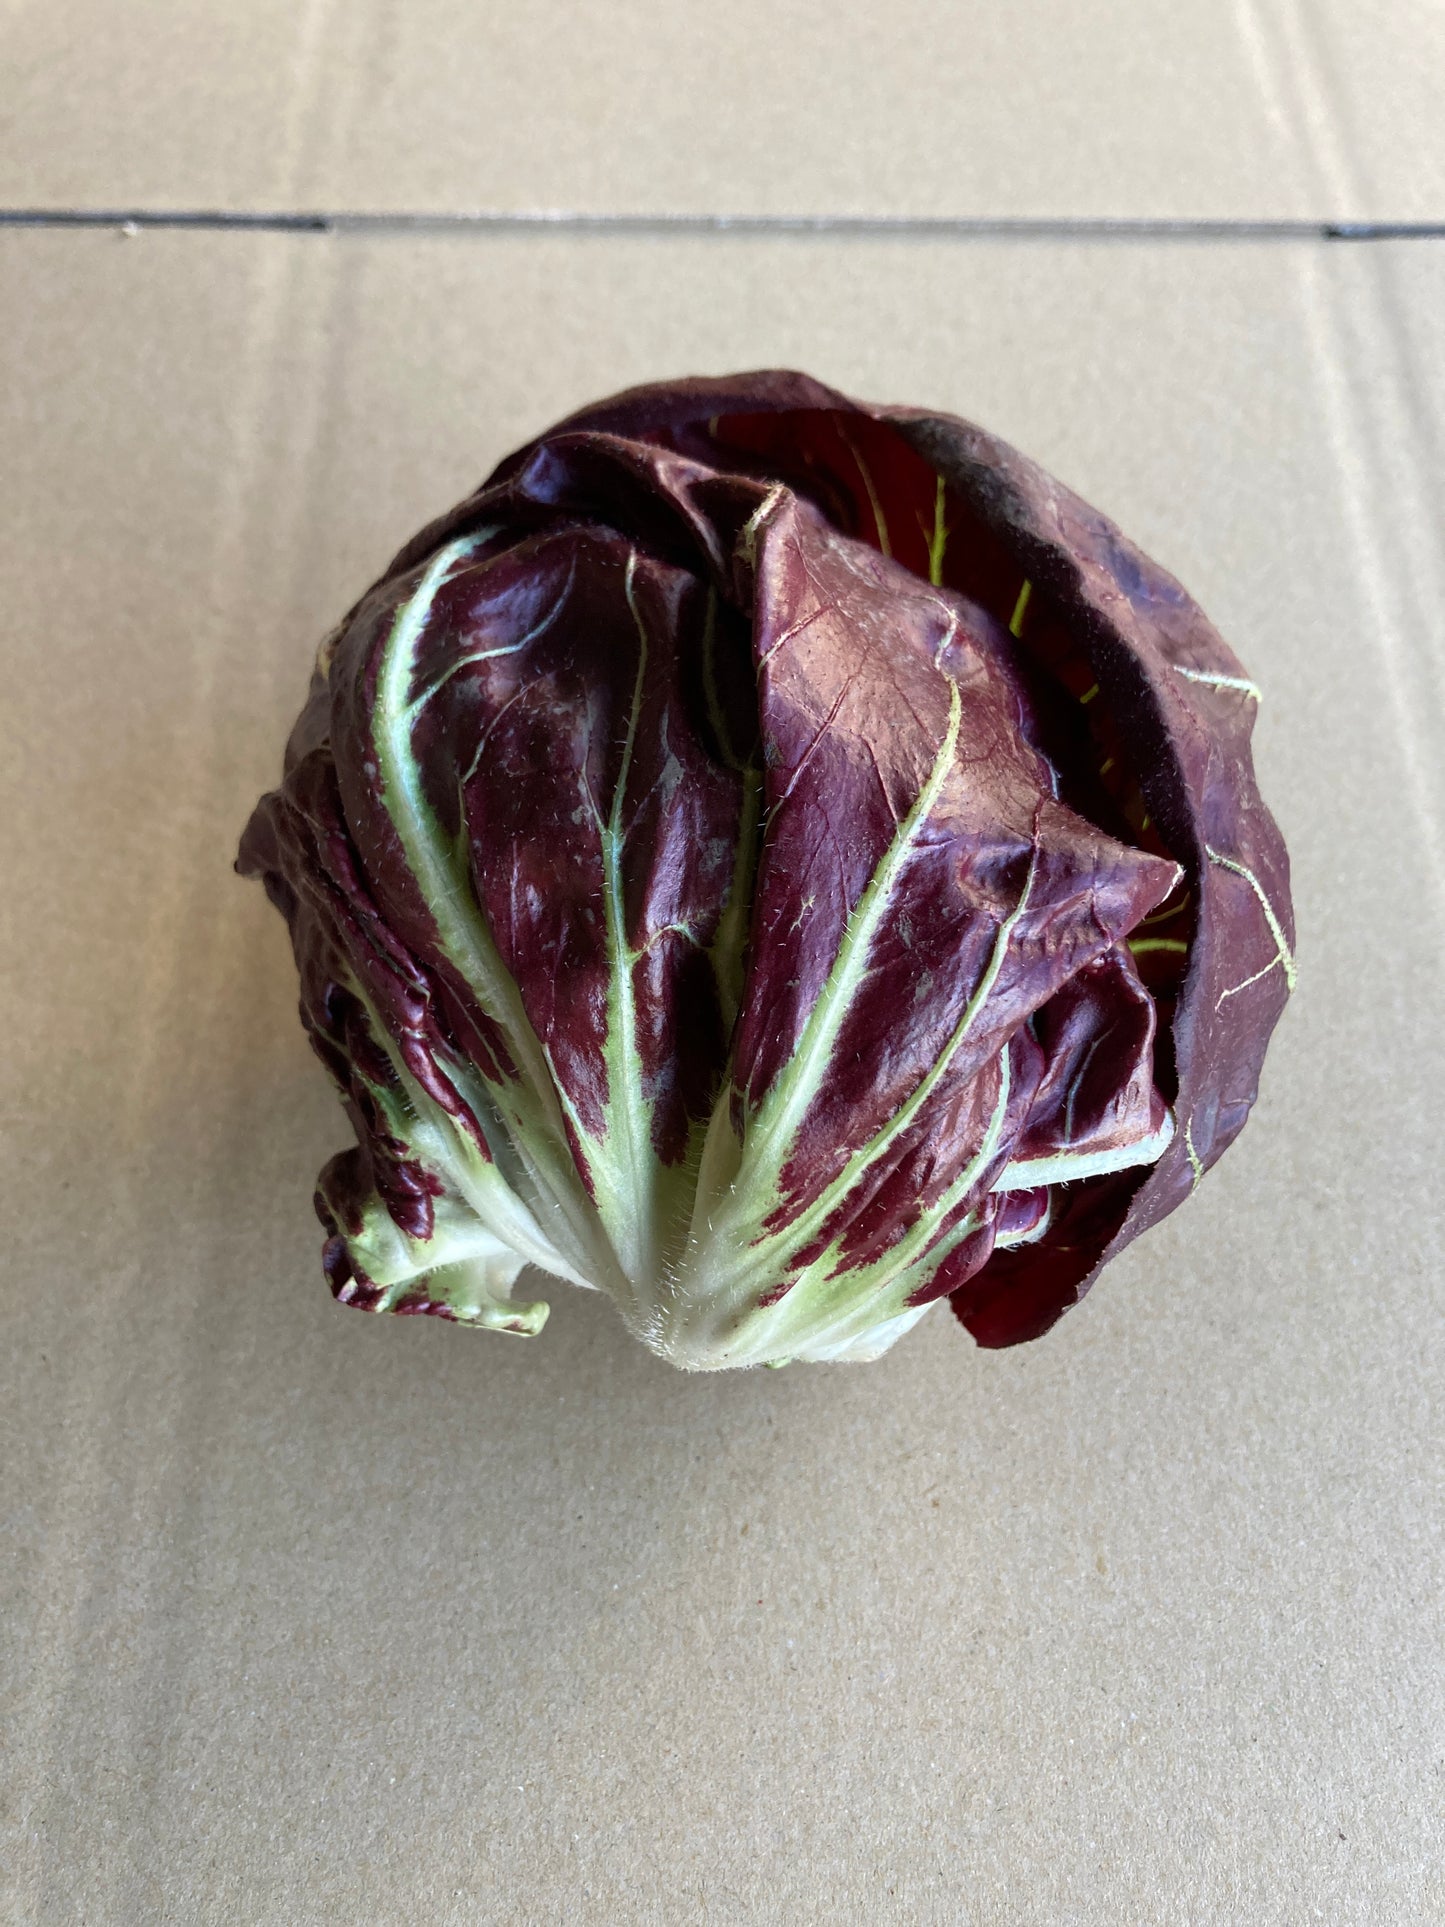 treviso lettuce/radicchio, head